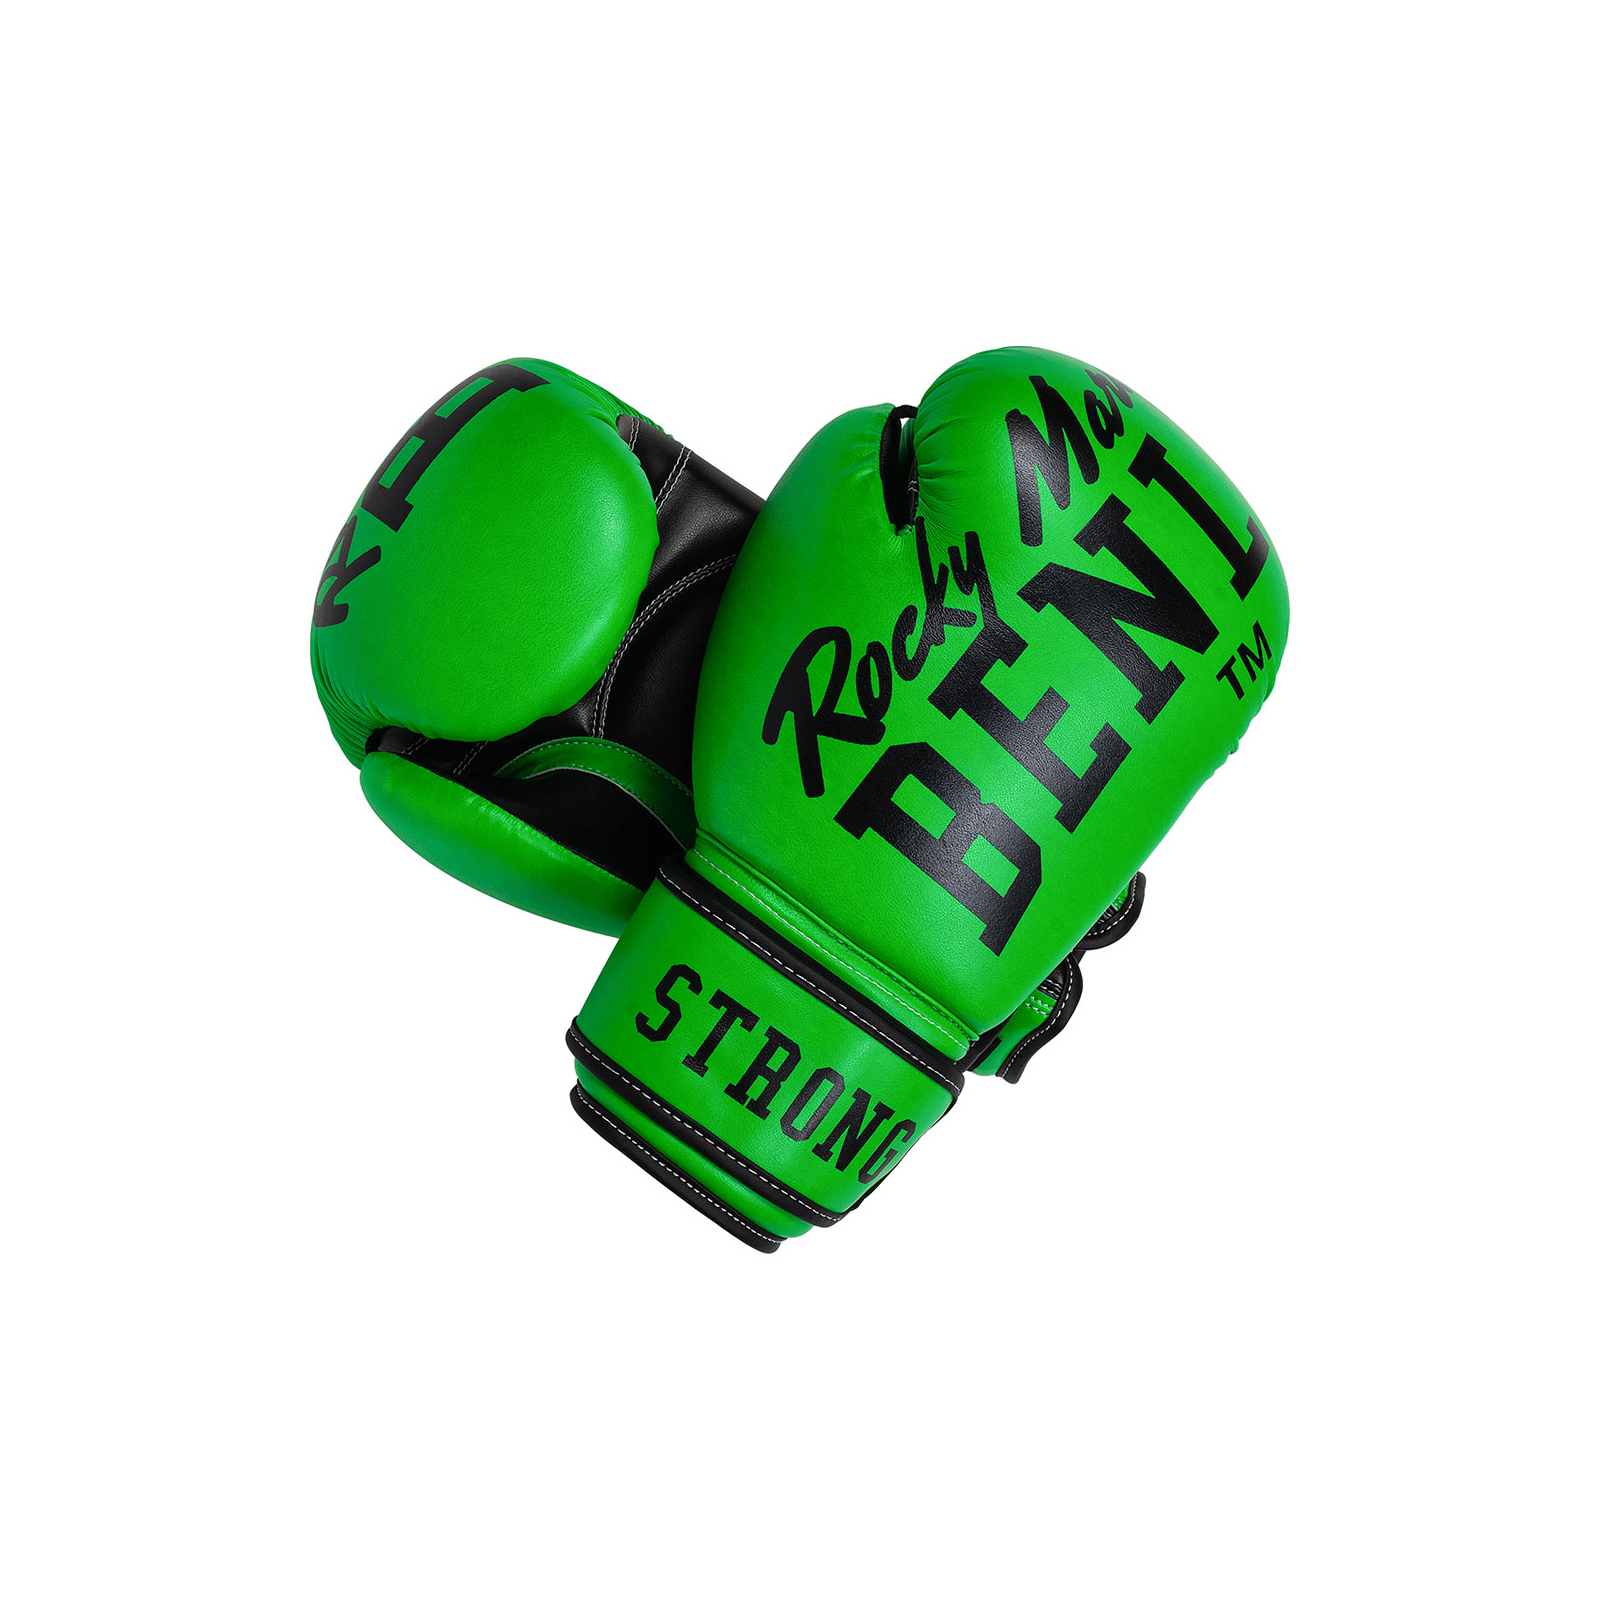 Боксерские перчатки Benlee Chunky B PU-шкіра 12oz Зелені (199261 (Neon green) 12 oz.)